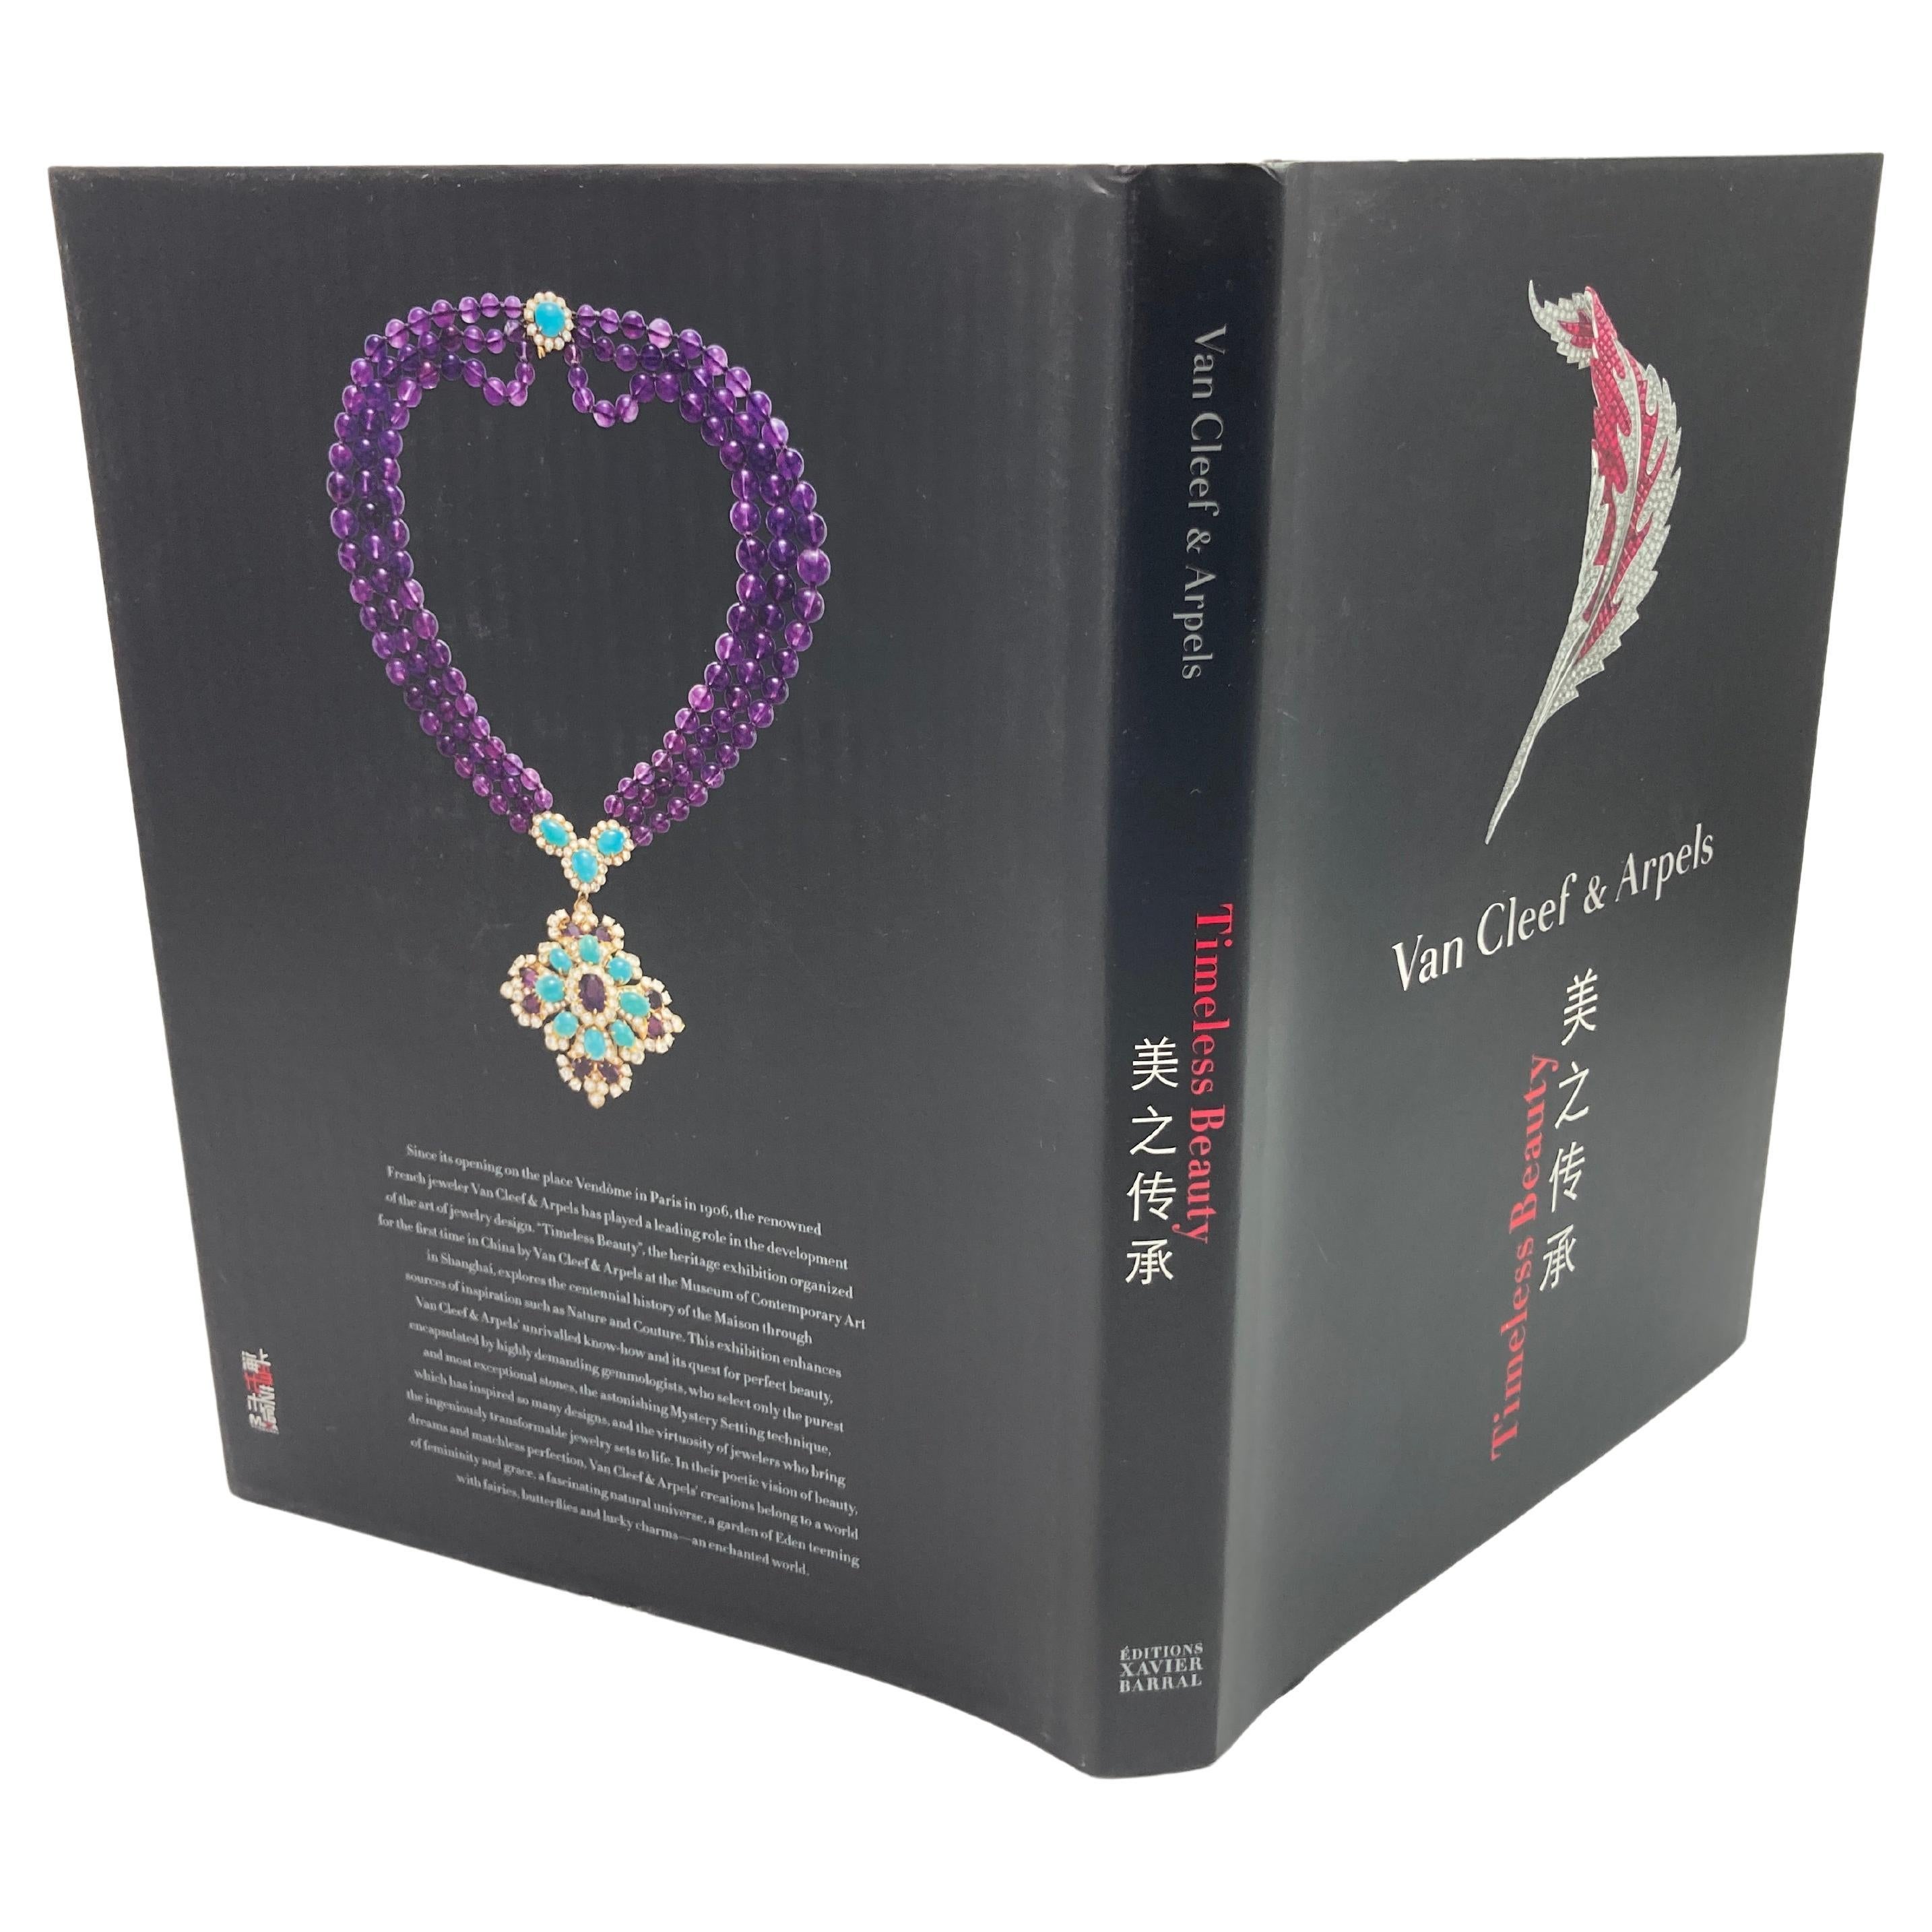 Van Cleef & Arpels: Timeless Beauty Hardcover – July 31, 2012.